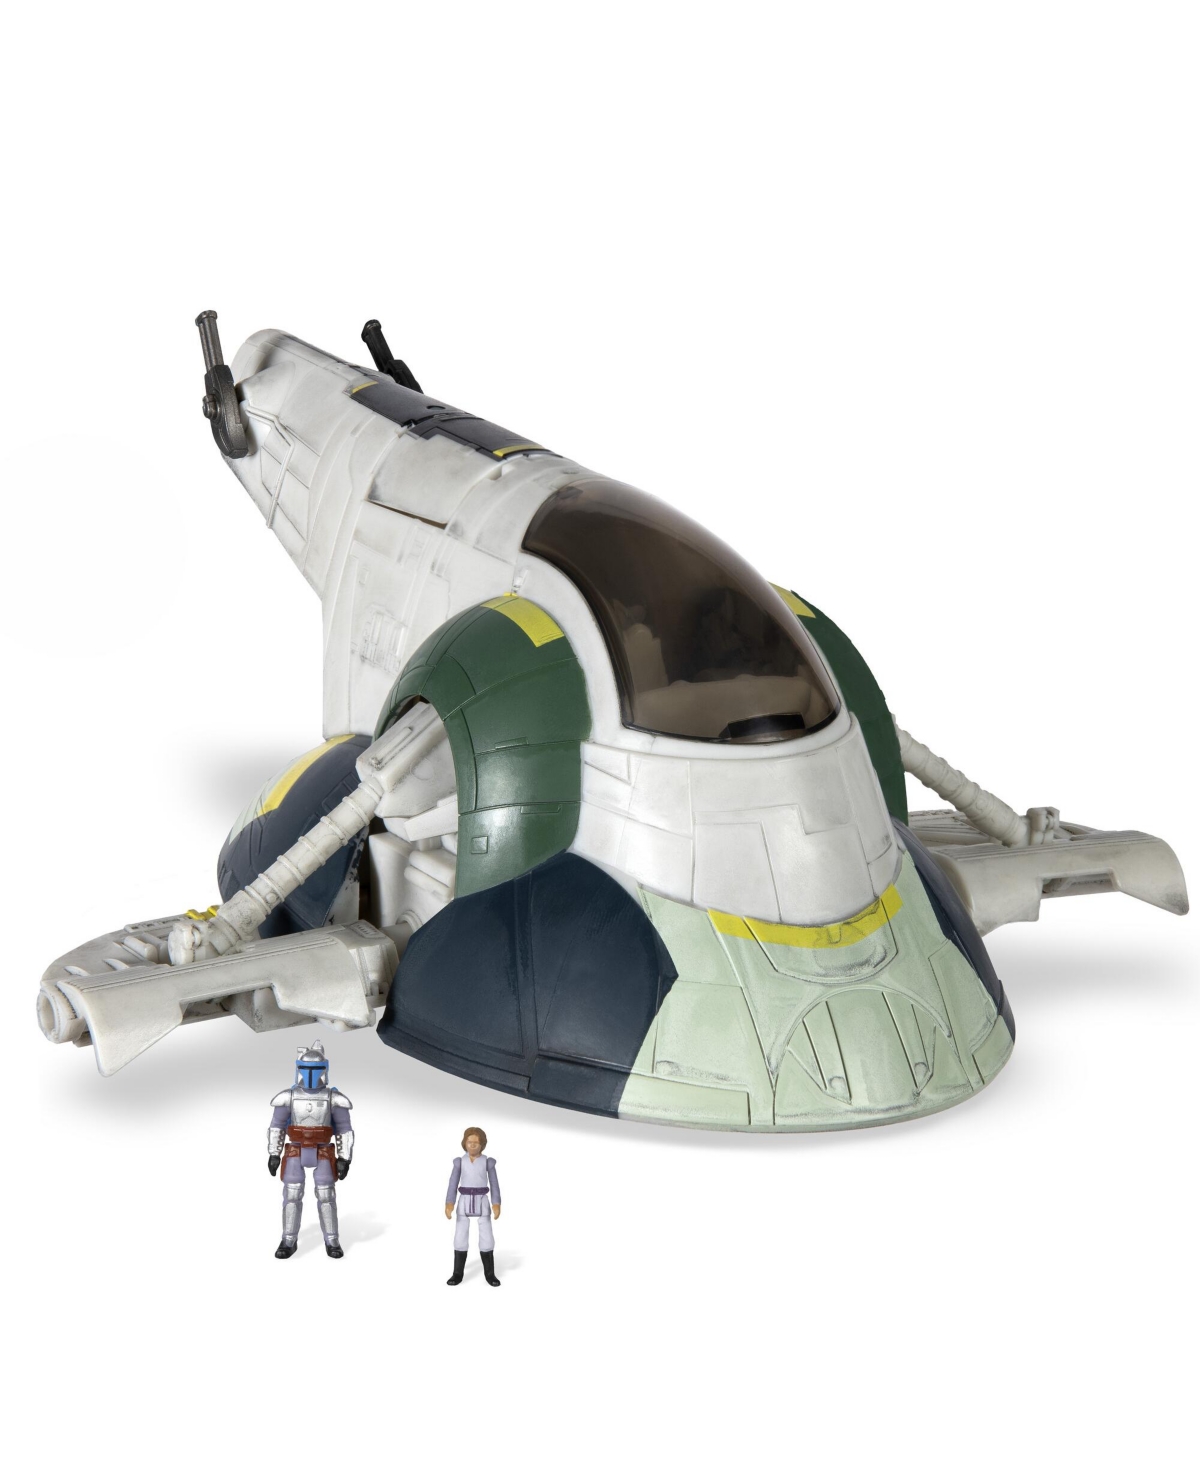 Shop Star Wars Deluxe Vehicle 8" Vehicle Figure Jango Fett's Starship In Gray